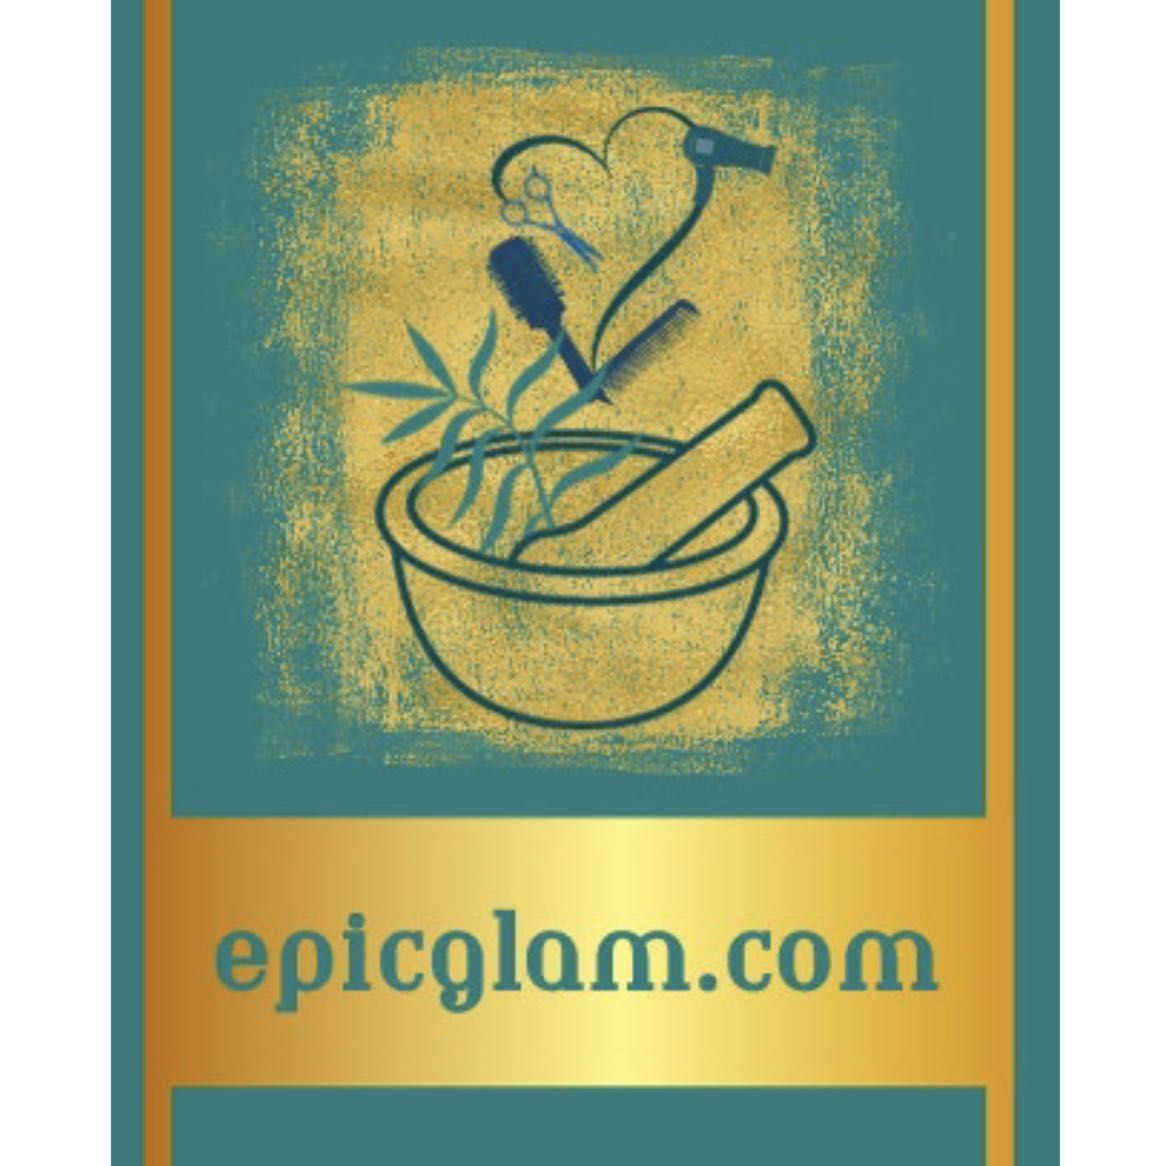 Epicglam.com, 5100 W. Sublet Rd., Inside Salon & Spa Galleria-Station 512, Arlington, 76001